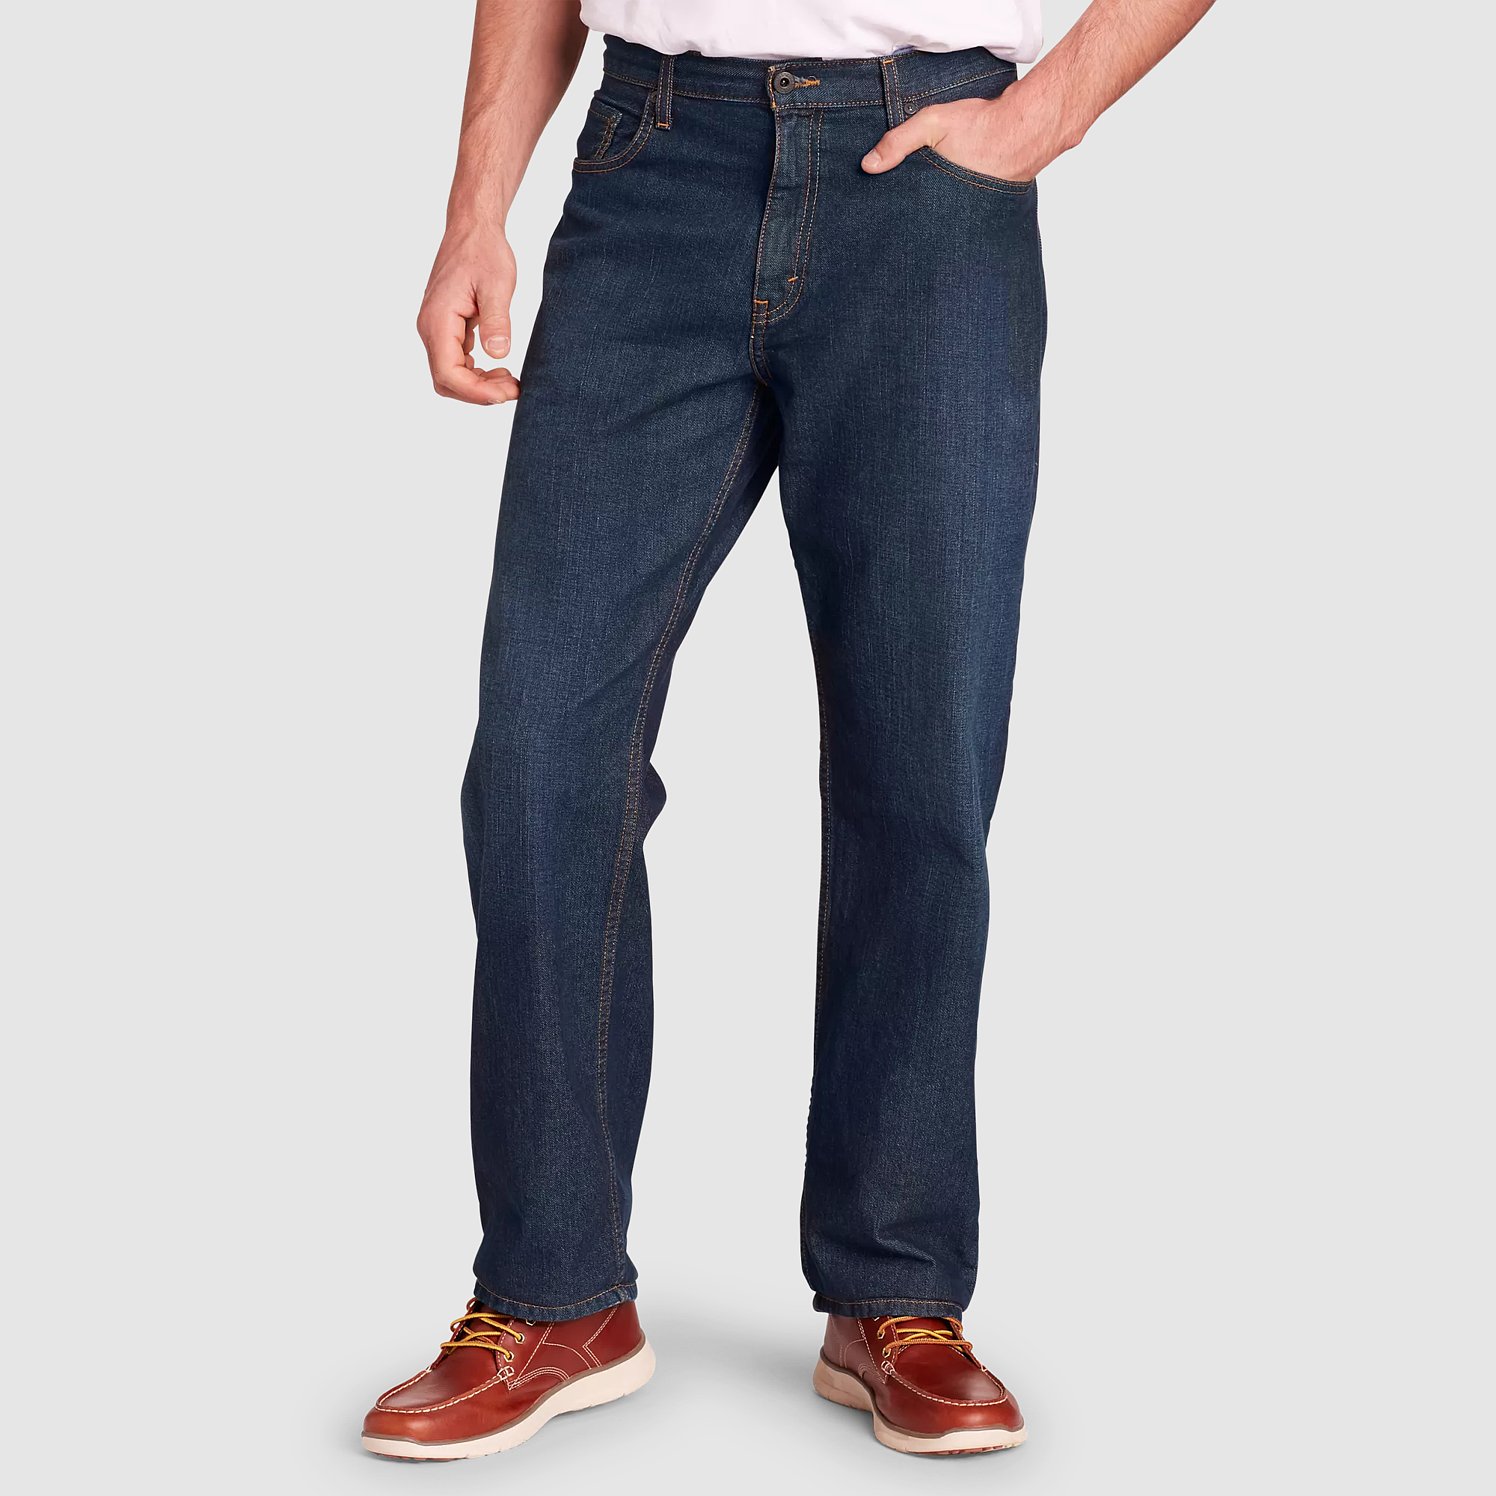 Aueoeo Men's Jeans Casual Denim Pants Regular Fit Comfort Stretch